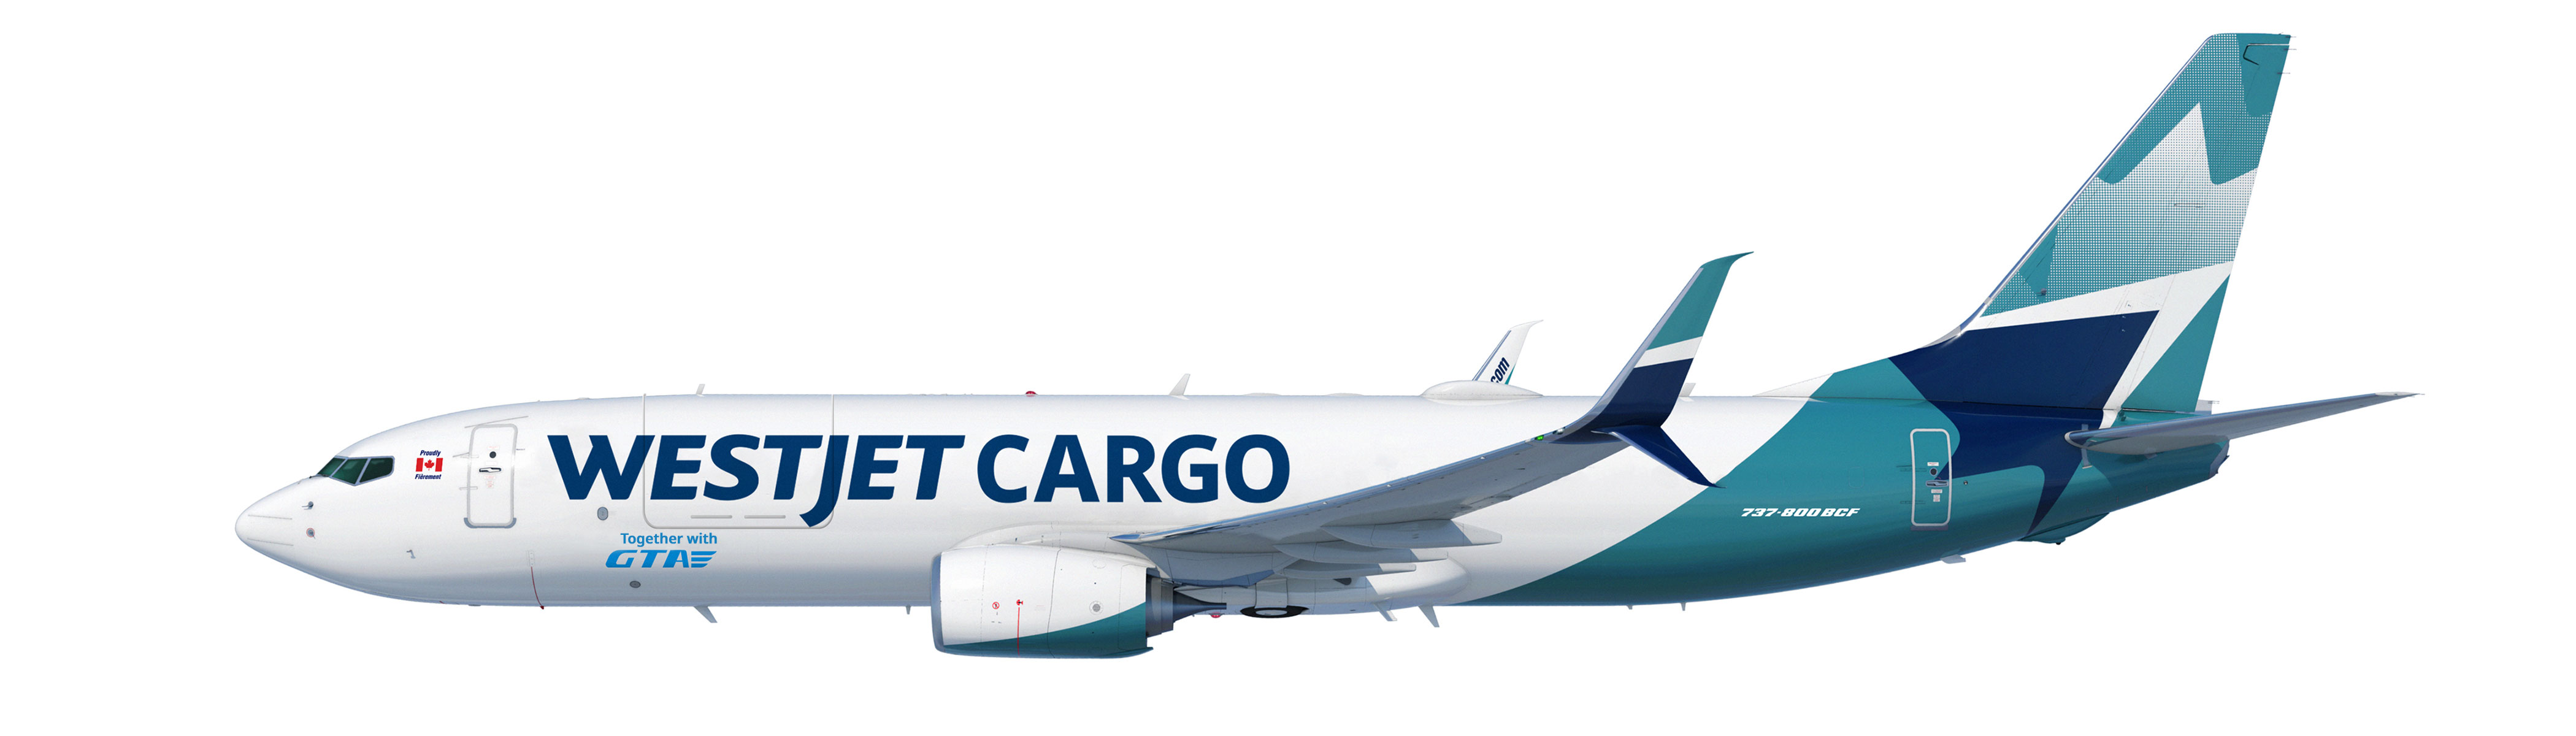 WestJet Cargo 737-800 BCF freighter plane